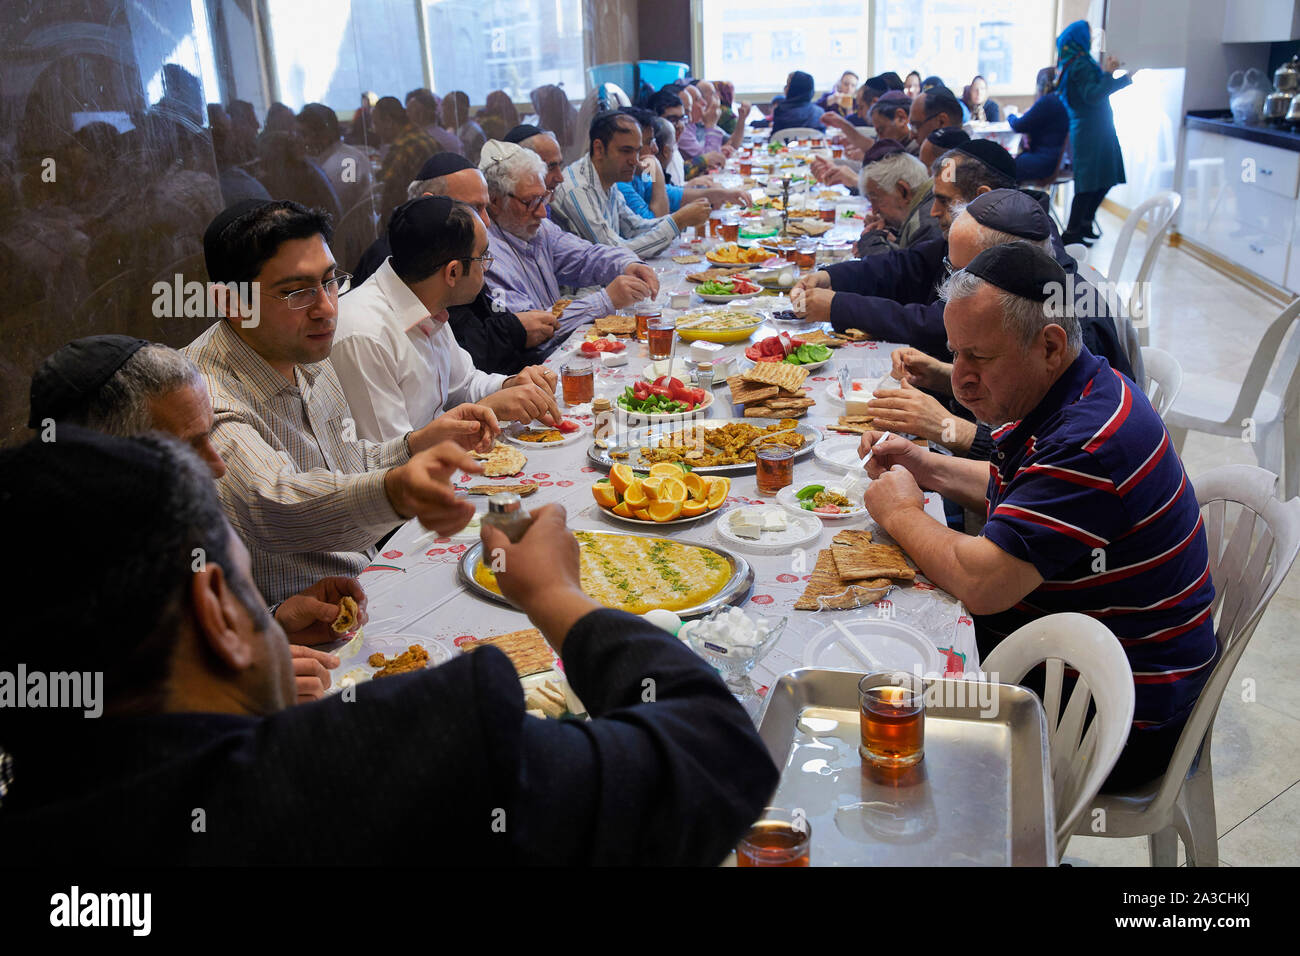 Iran Tehran Synagogue morning breakfast highschool Mozes the son of Imram 30-03-2017 foto: Jaco Klamer Stock Photo